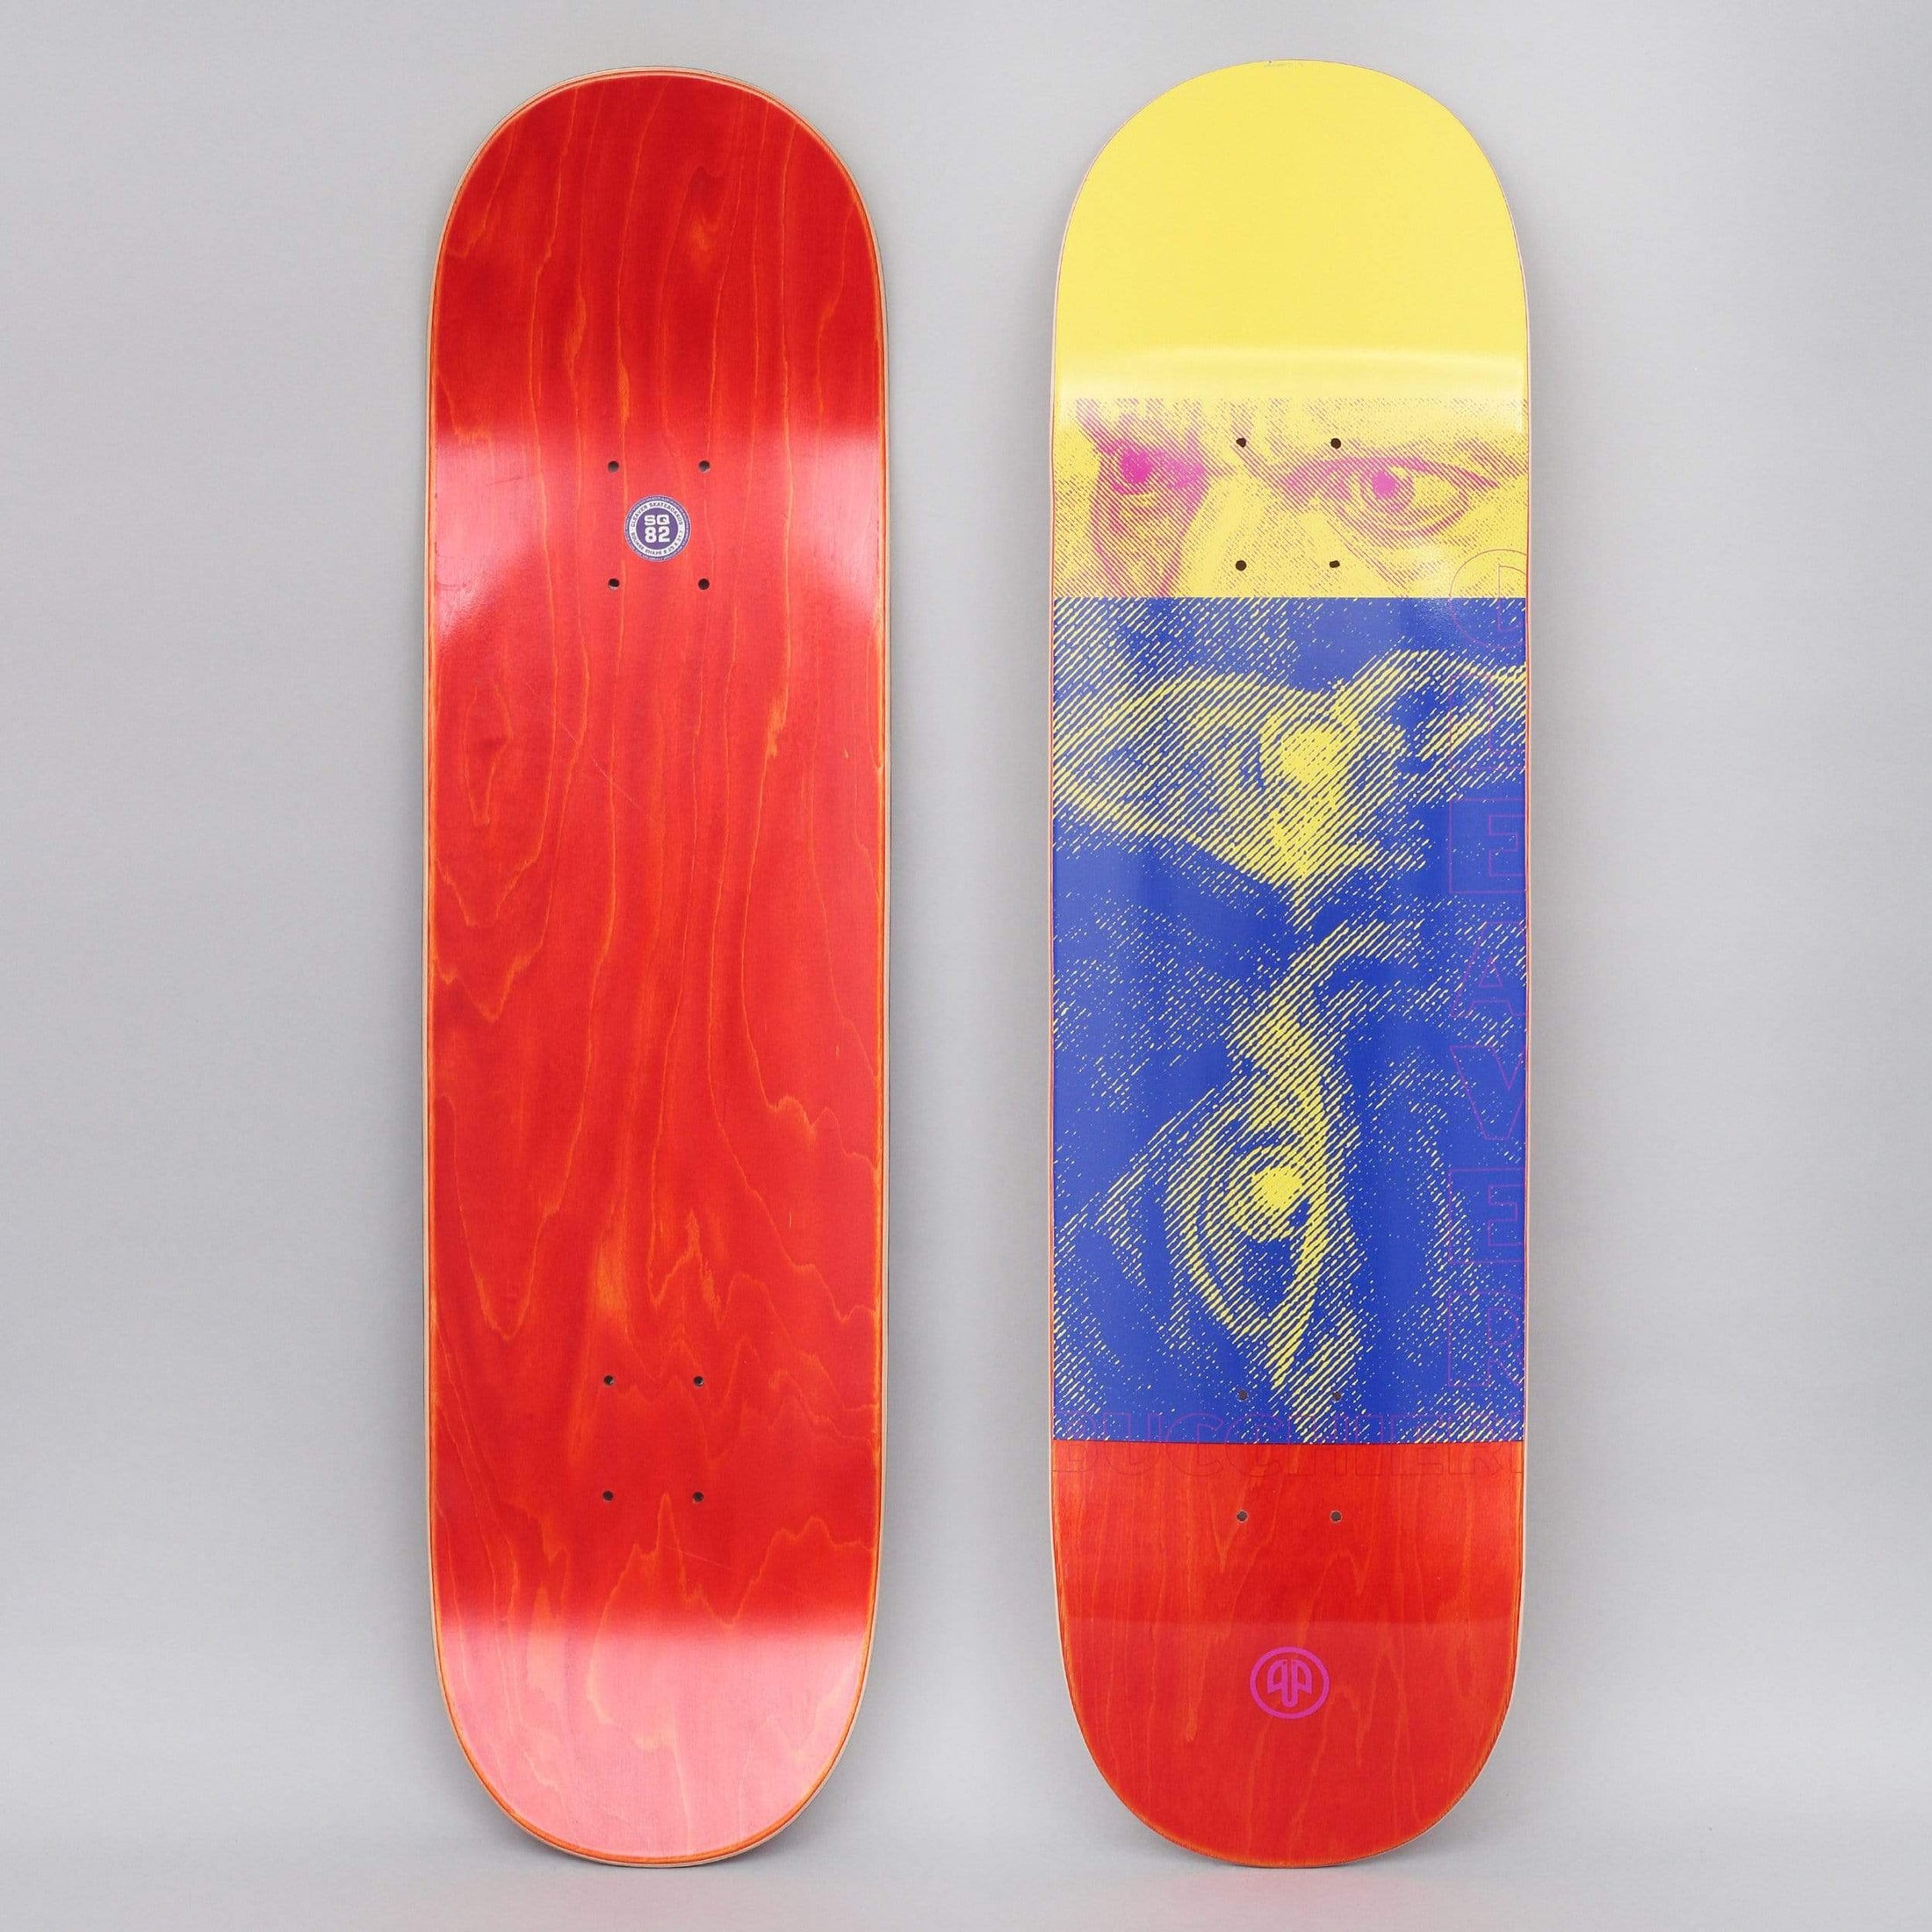 Cleaver 8.25 Bucchieri Eyes Skateboard Deck Yellow